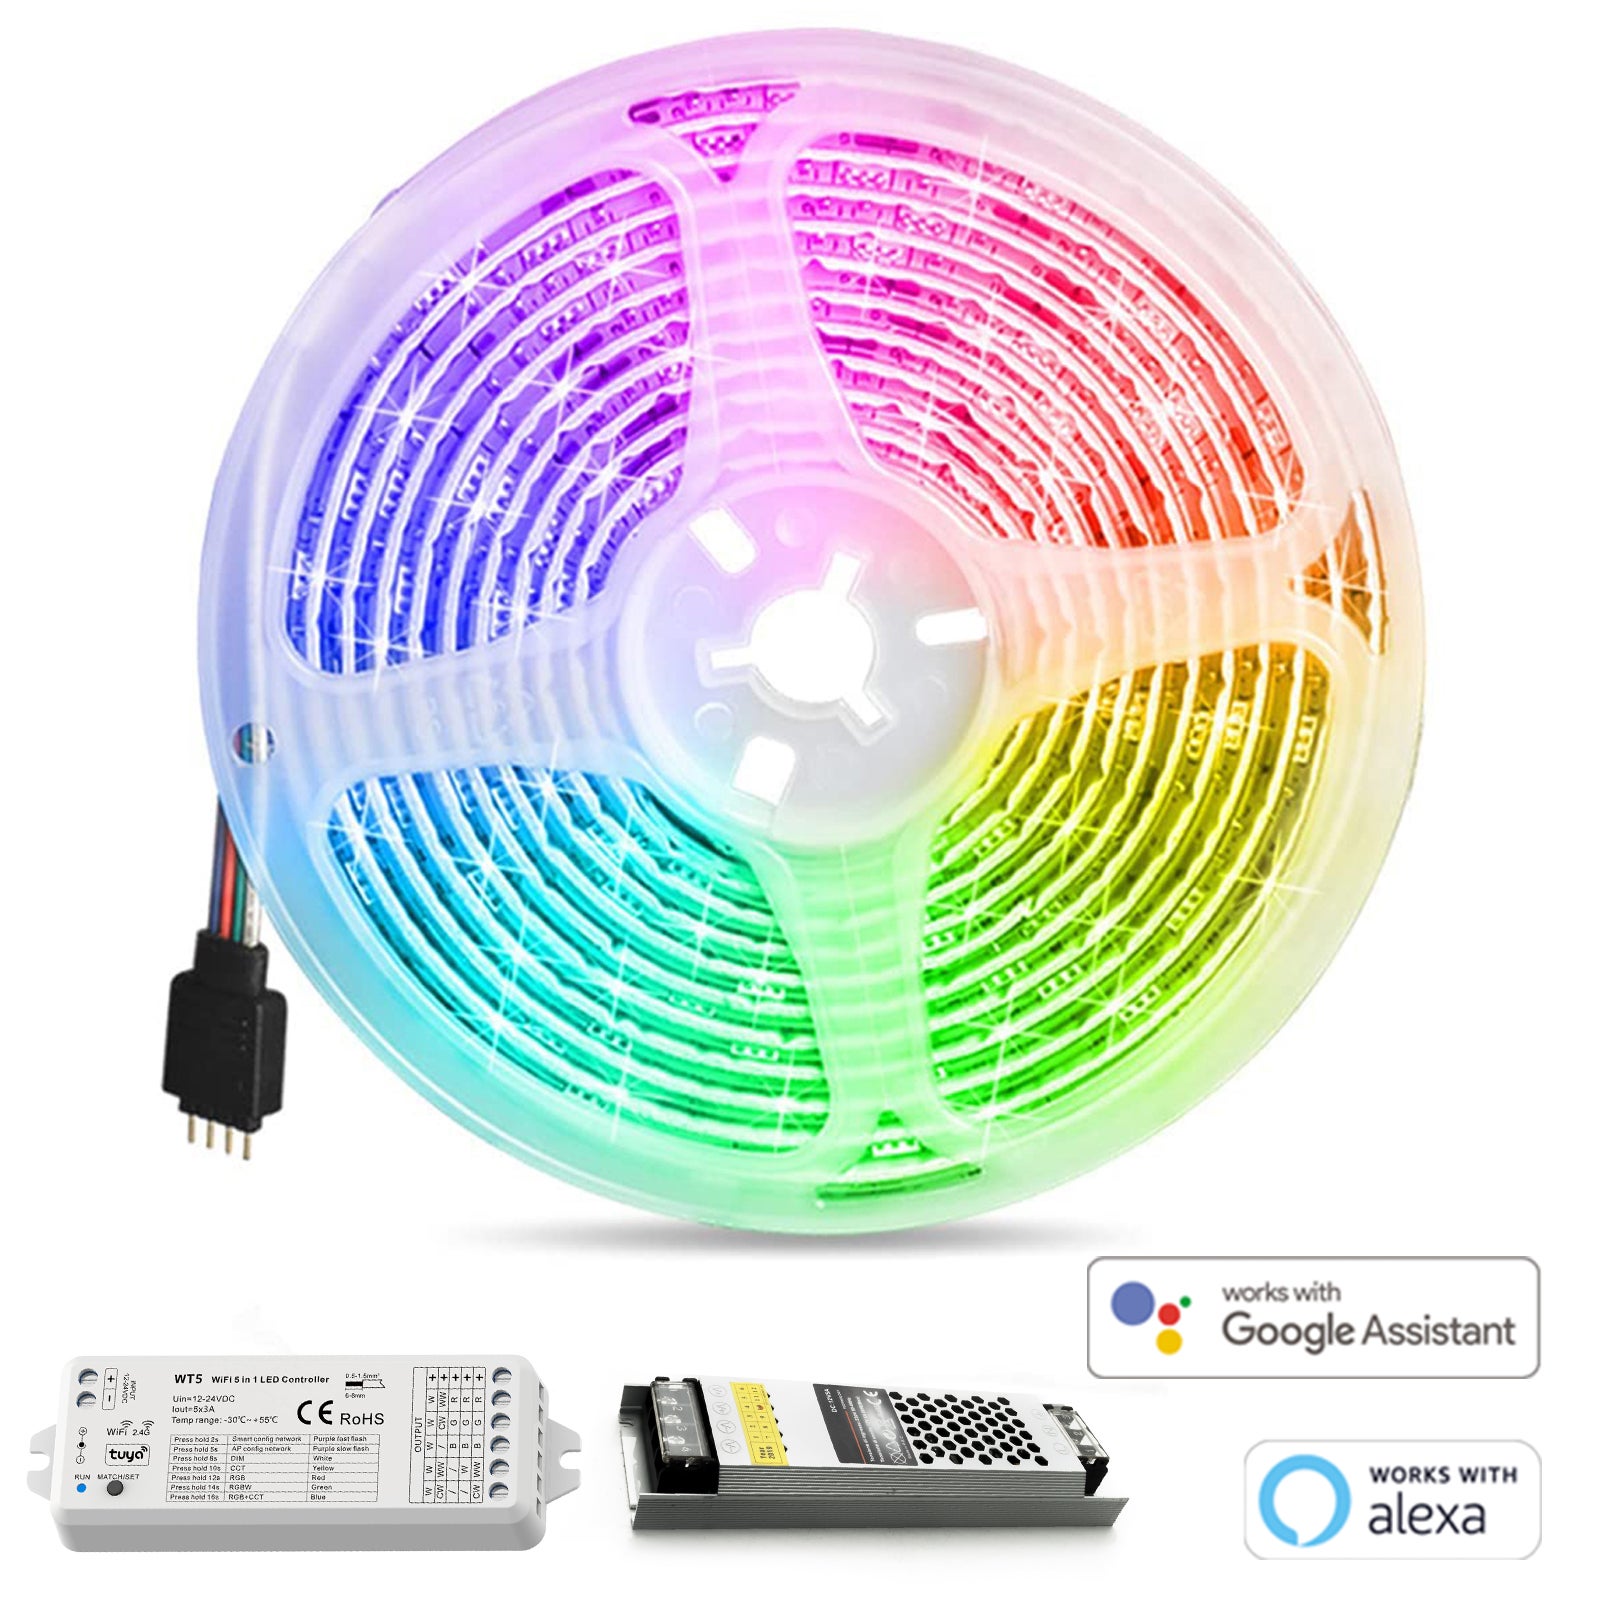 SET SMART striscia 12V LED RGB multicolore WiFi centralina